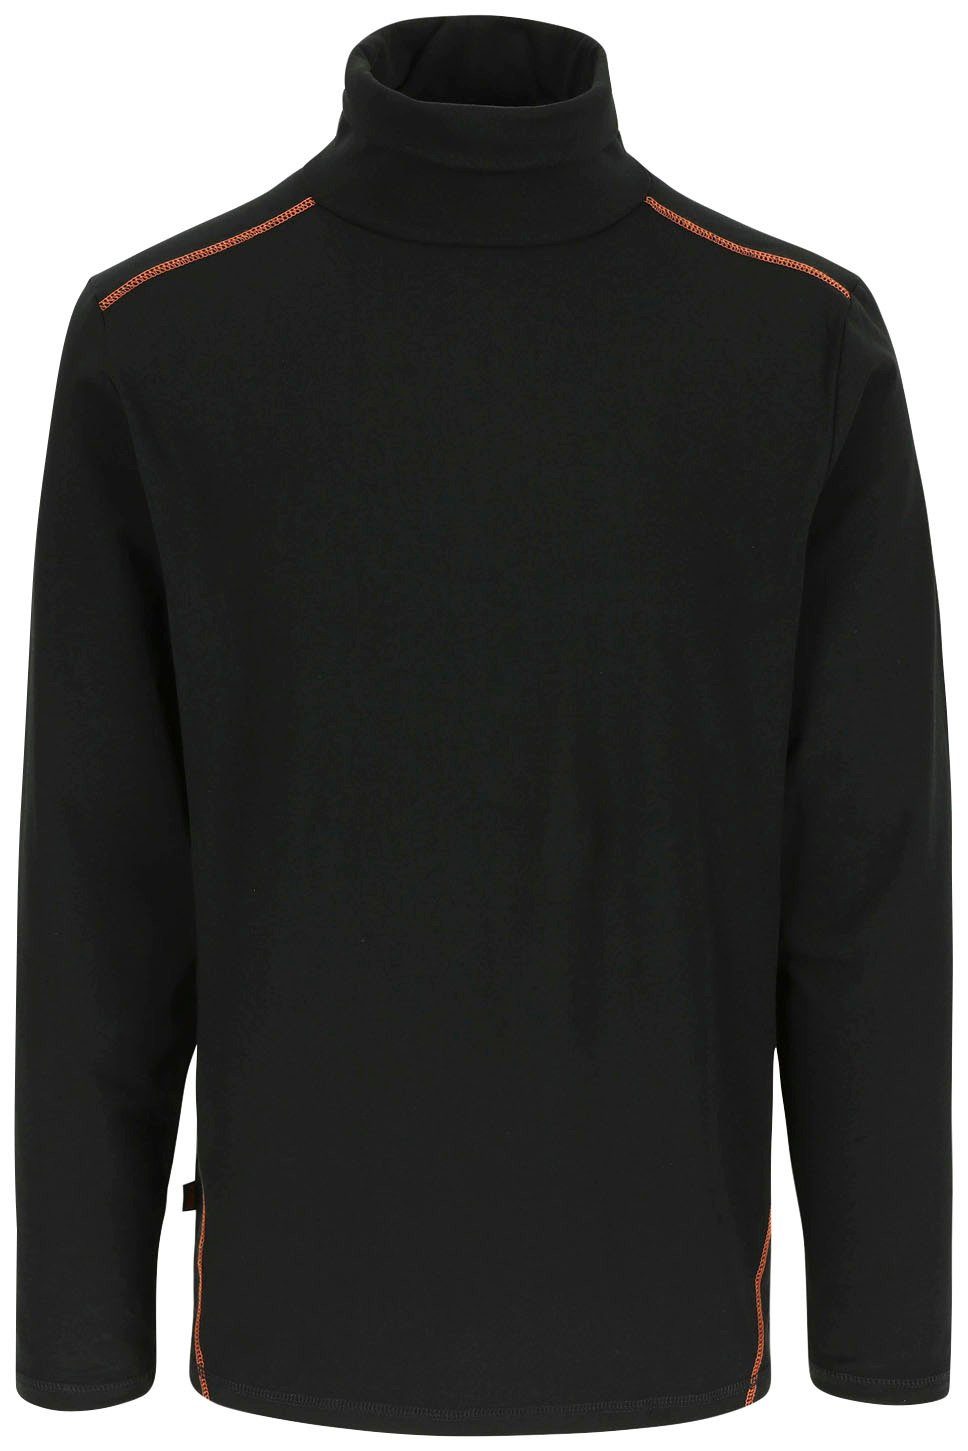 Herock Rollkragenshirt Lotis Rollkragen-T-Shirt Langärmlig Stretch, 95 % Baumwolle, angenehmes Tragegefühl | Rollkragenshirts